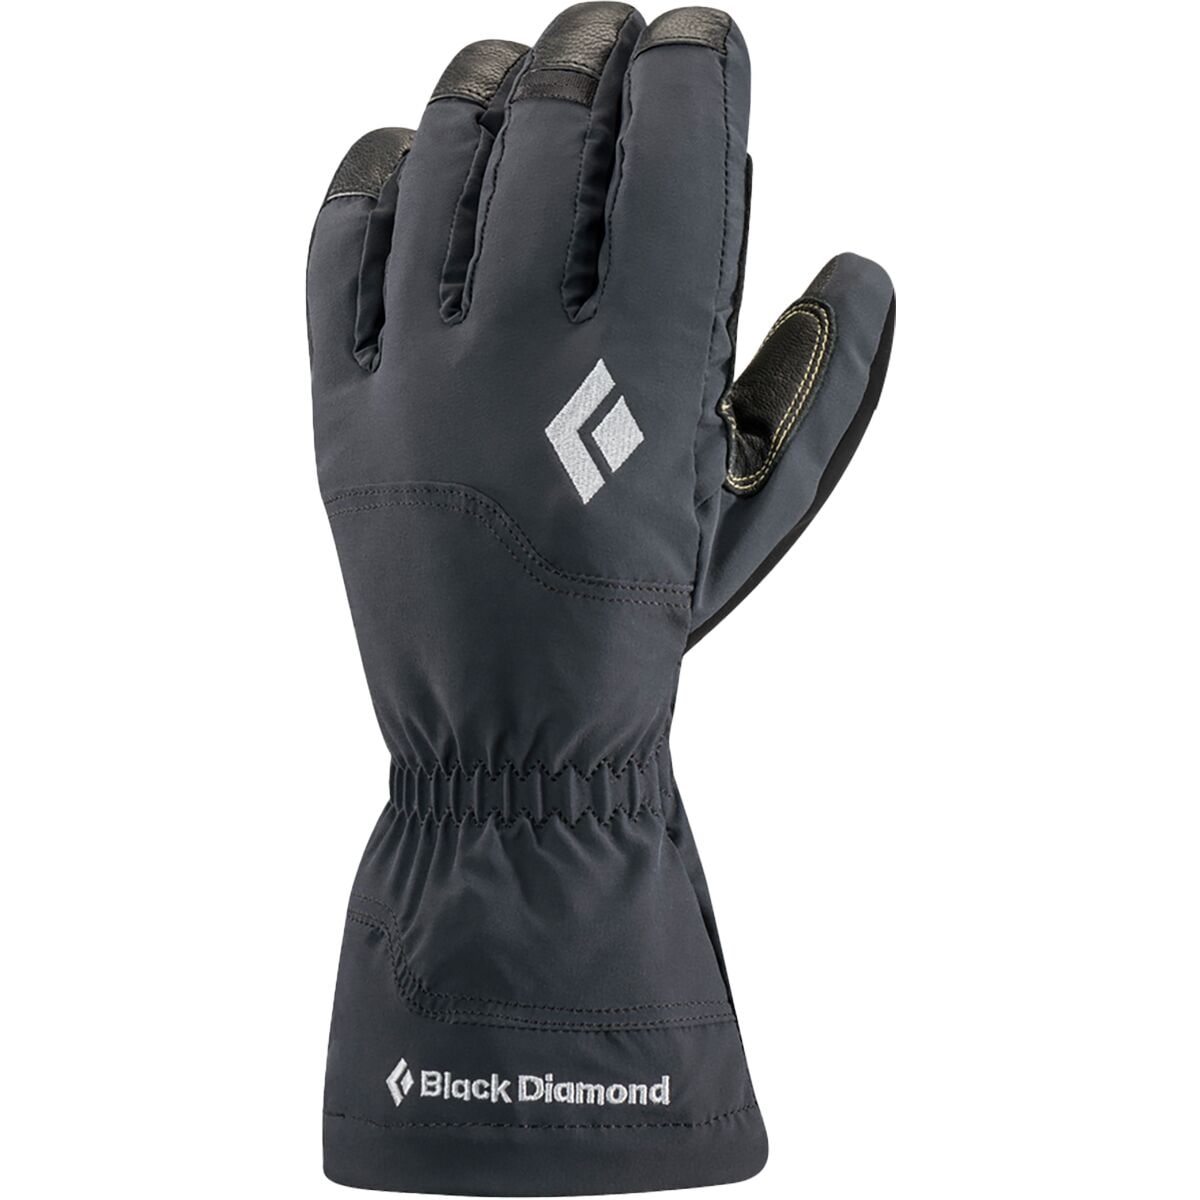 Black Diamond Glissade Glove - Men's